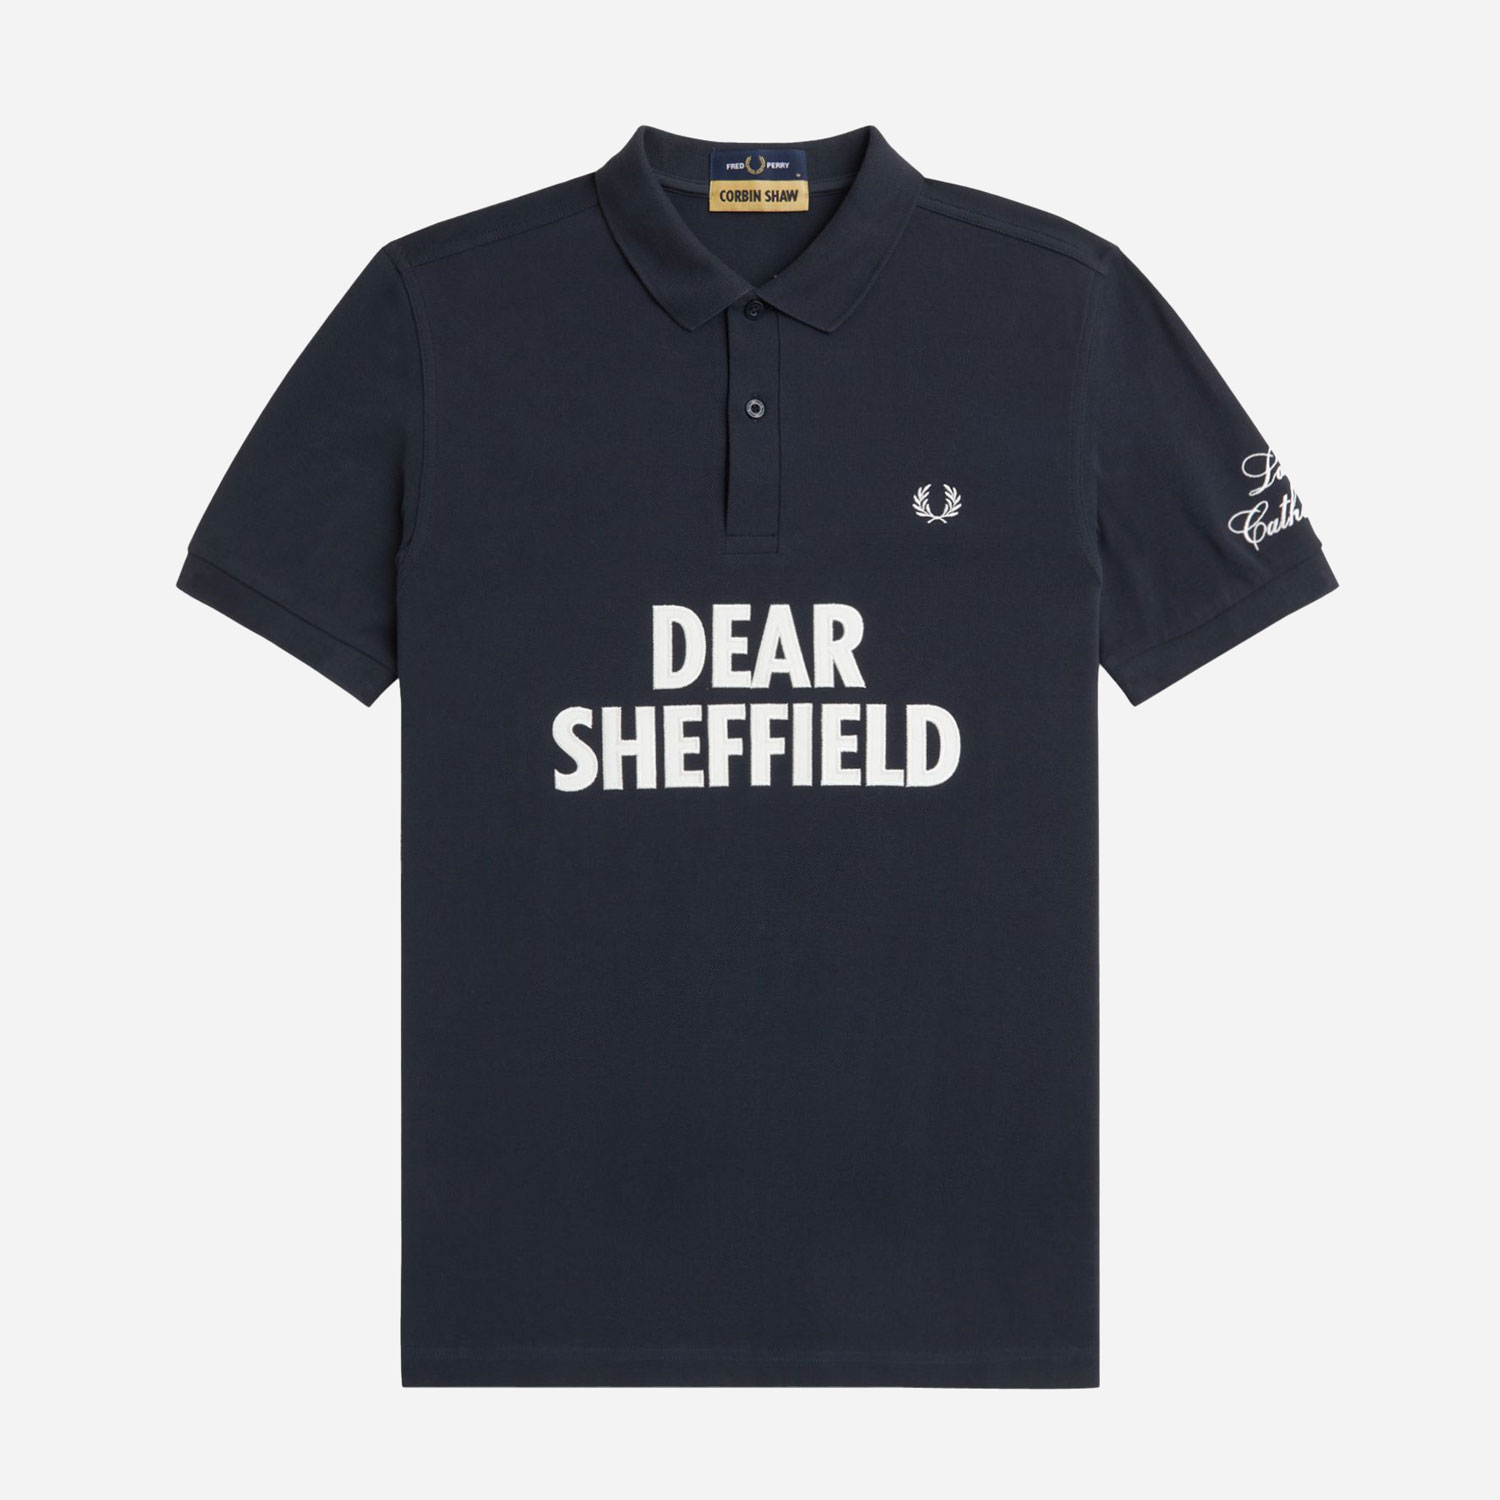 Fred Perry x Corbin Shaw Dear Sheffield Regular Fit Short Sleeve Polo - Navy